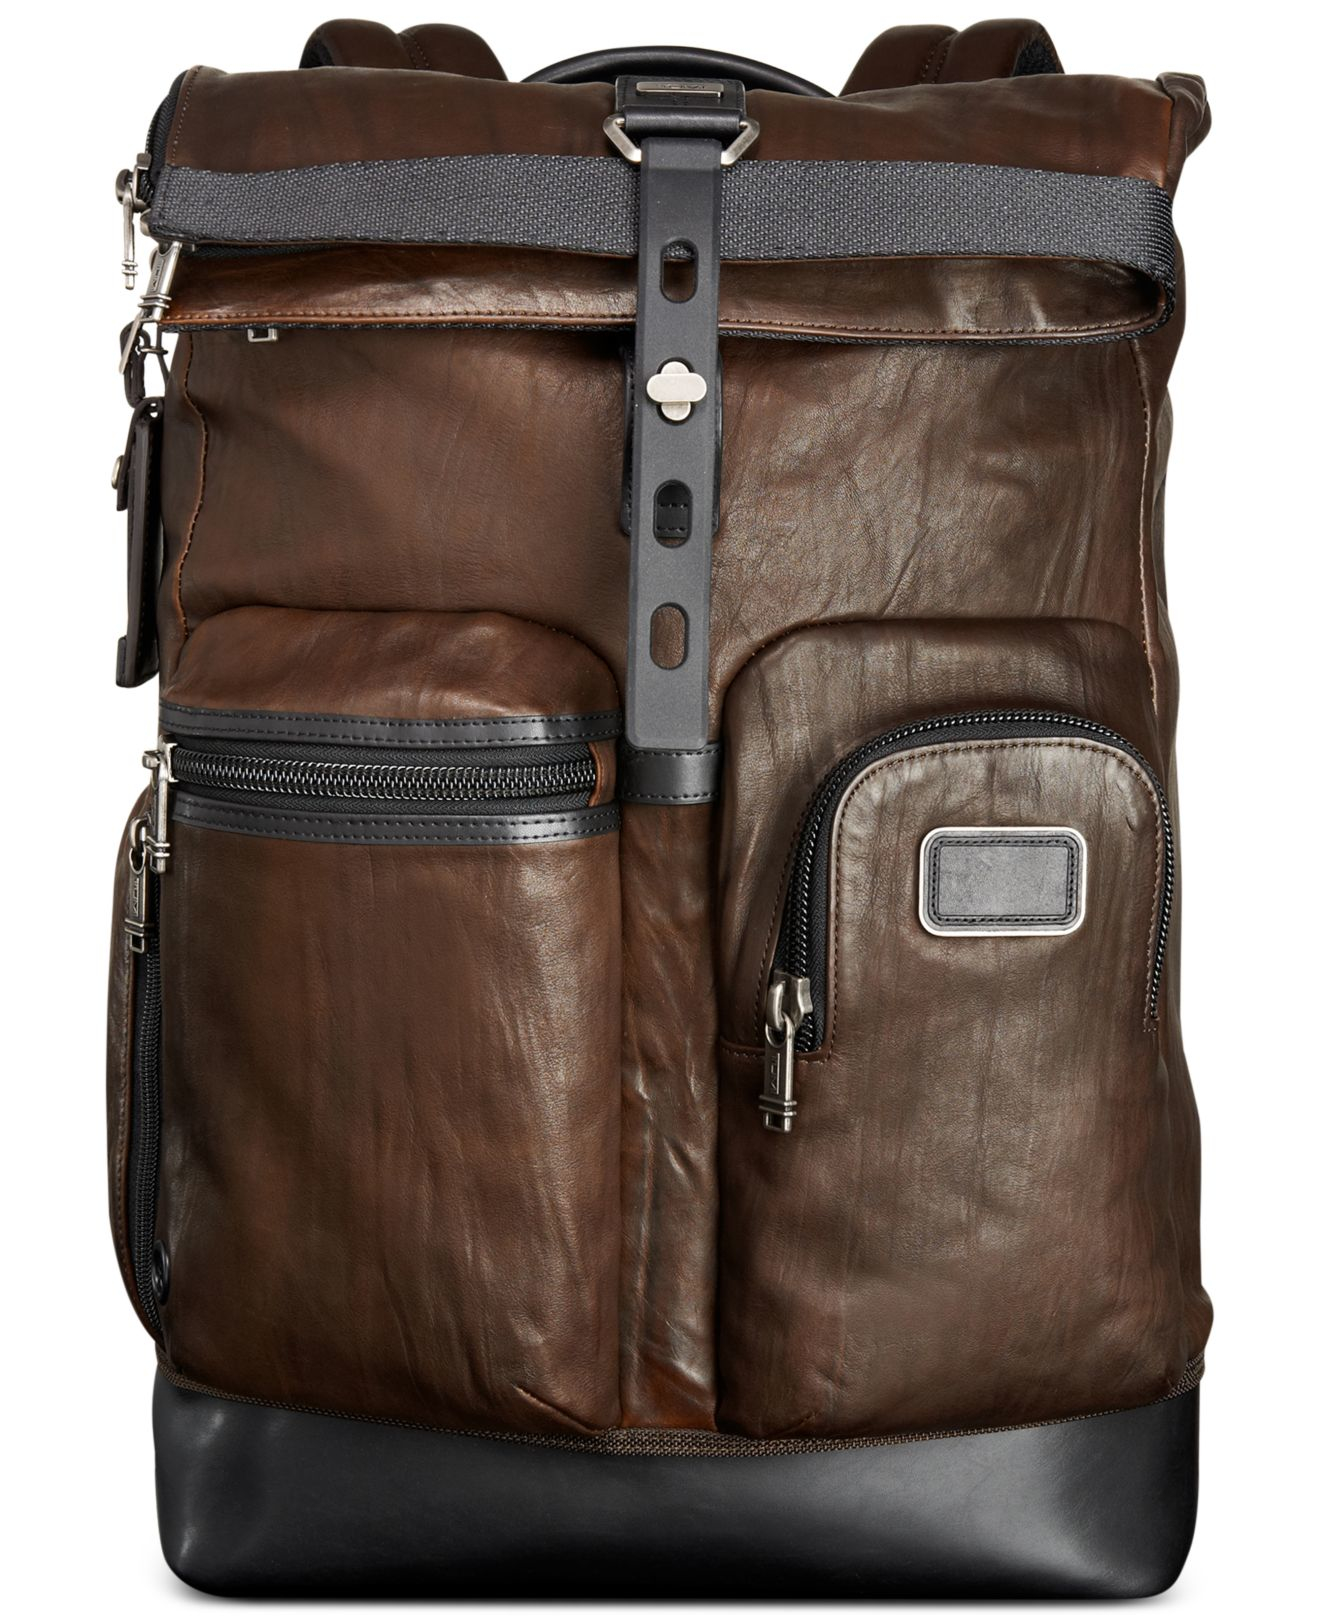 Tumi Alpha Bravo Luke Roll-top Leather Backpack in Dark Brown (Brown) for Men - Lyst